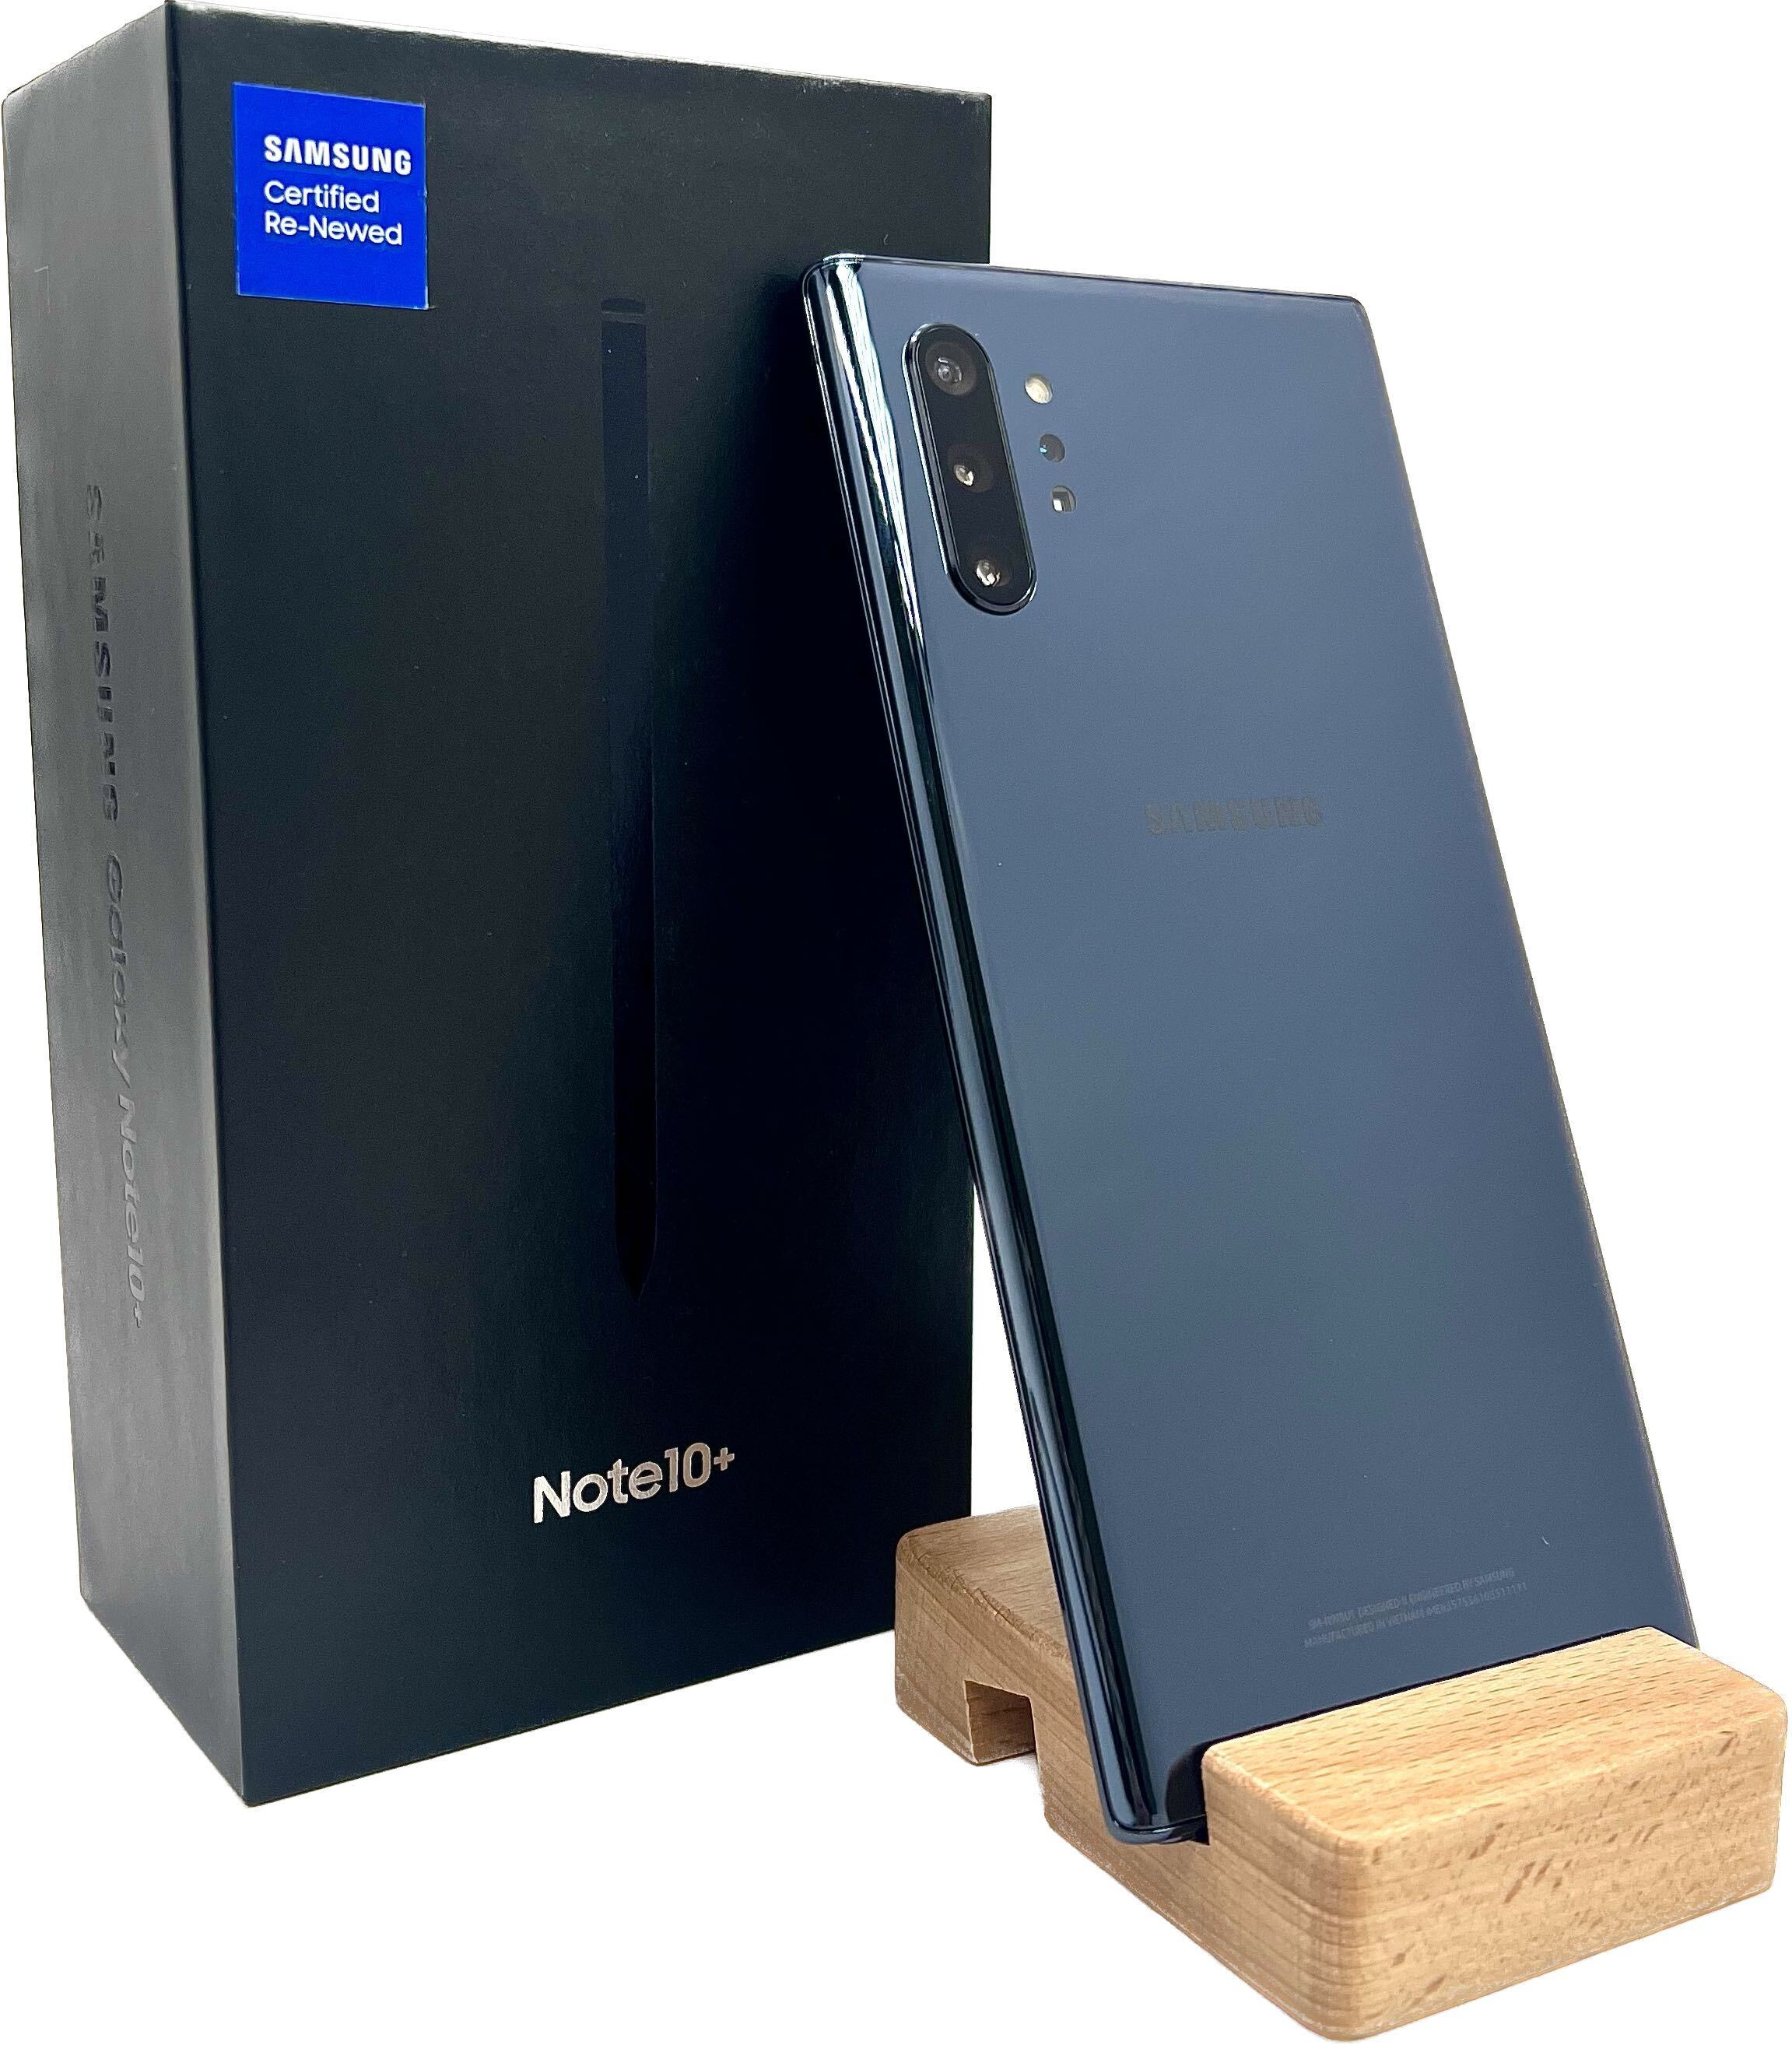 Samsung Galaxy Note10+ Certified Renewed (Unlocked)